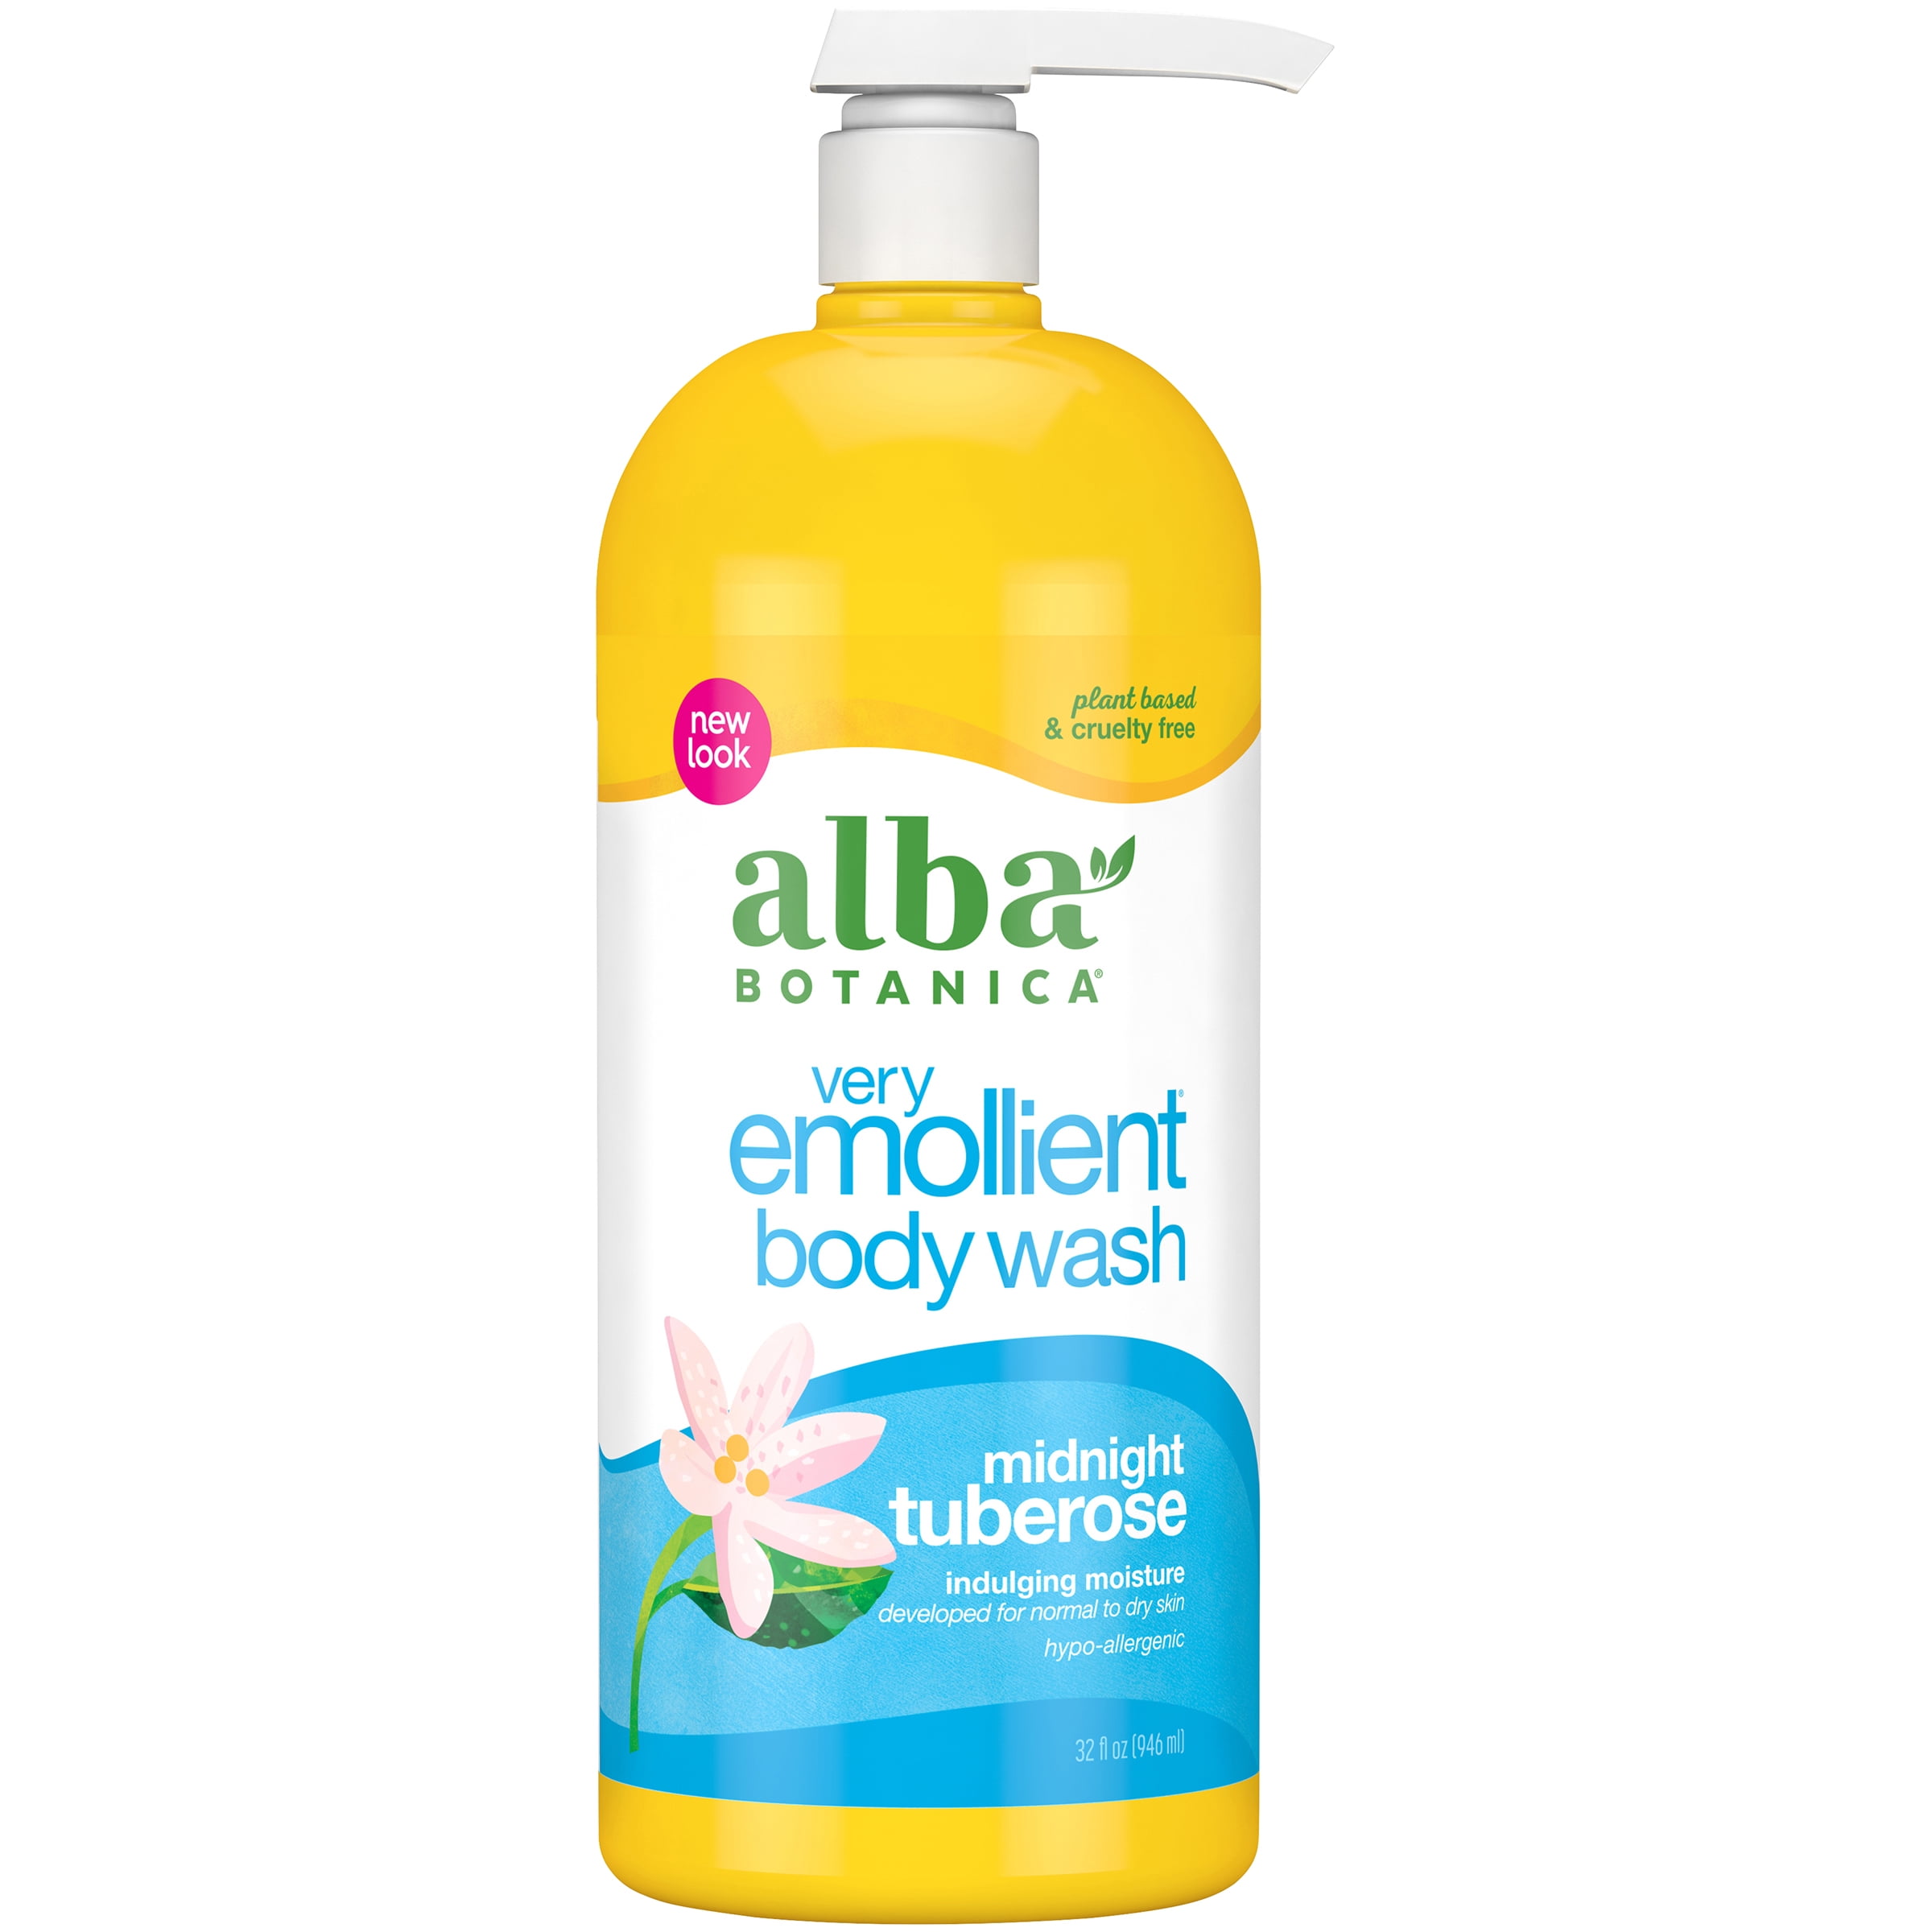 Alba Botanica Very Emollient Body Wash, Midnight Tuberose, 32 fl oz